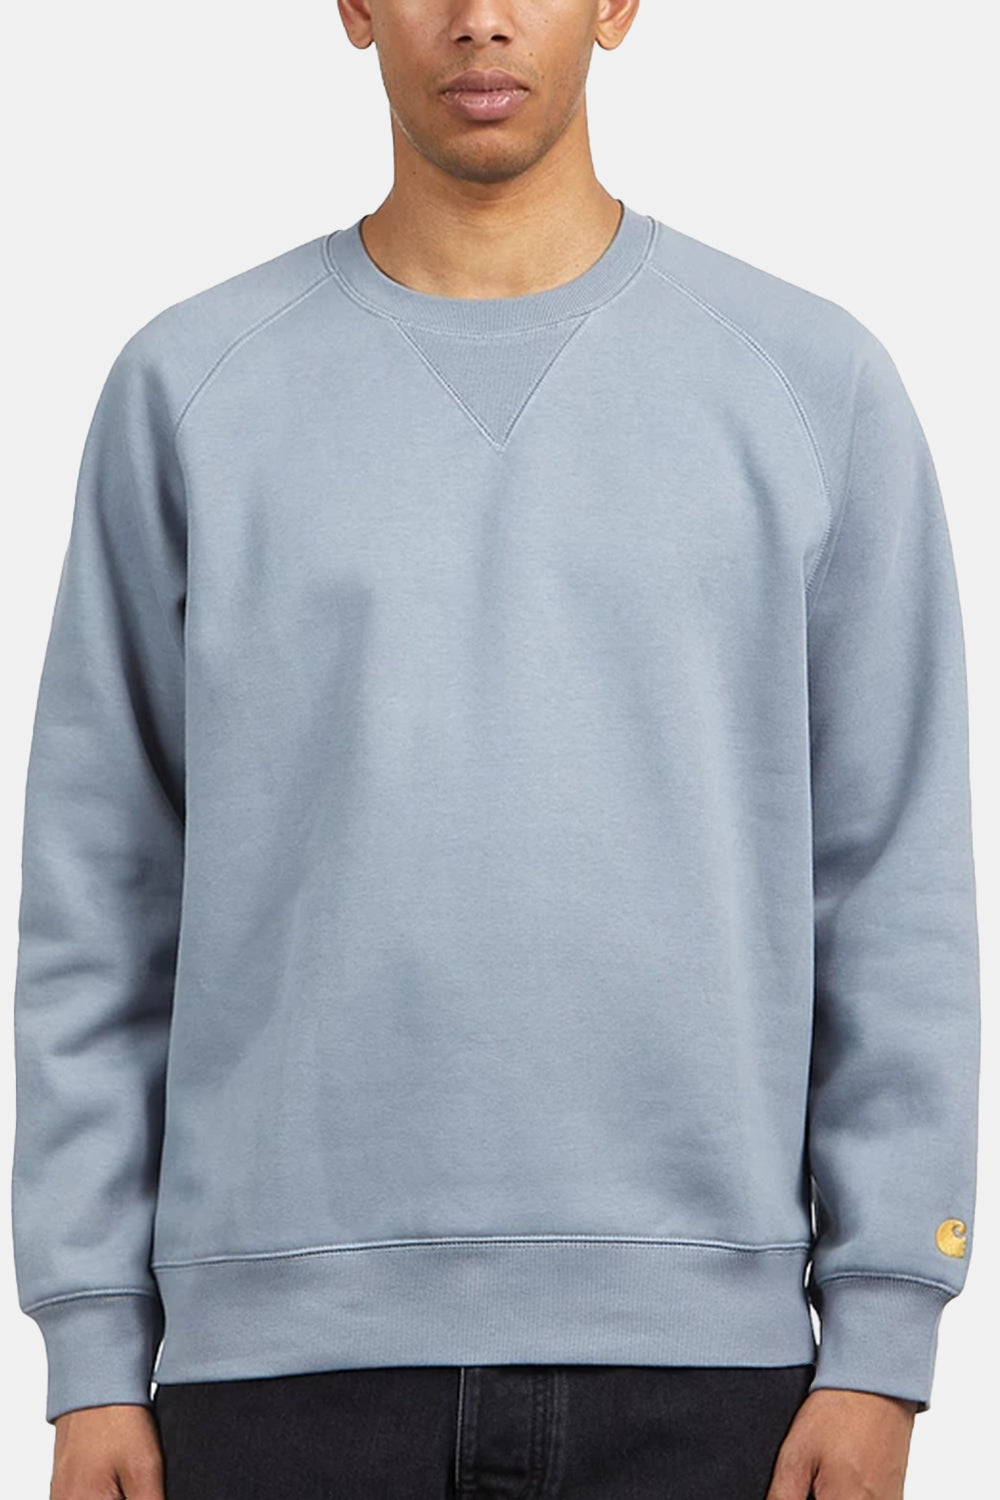 Carhartt WIP Chase Heavy Sweatshirt (Mirror/Gold)